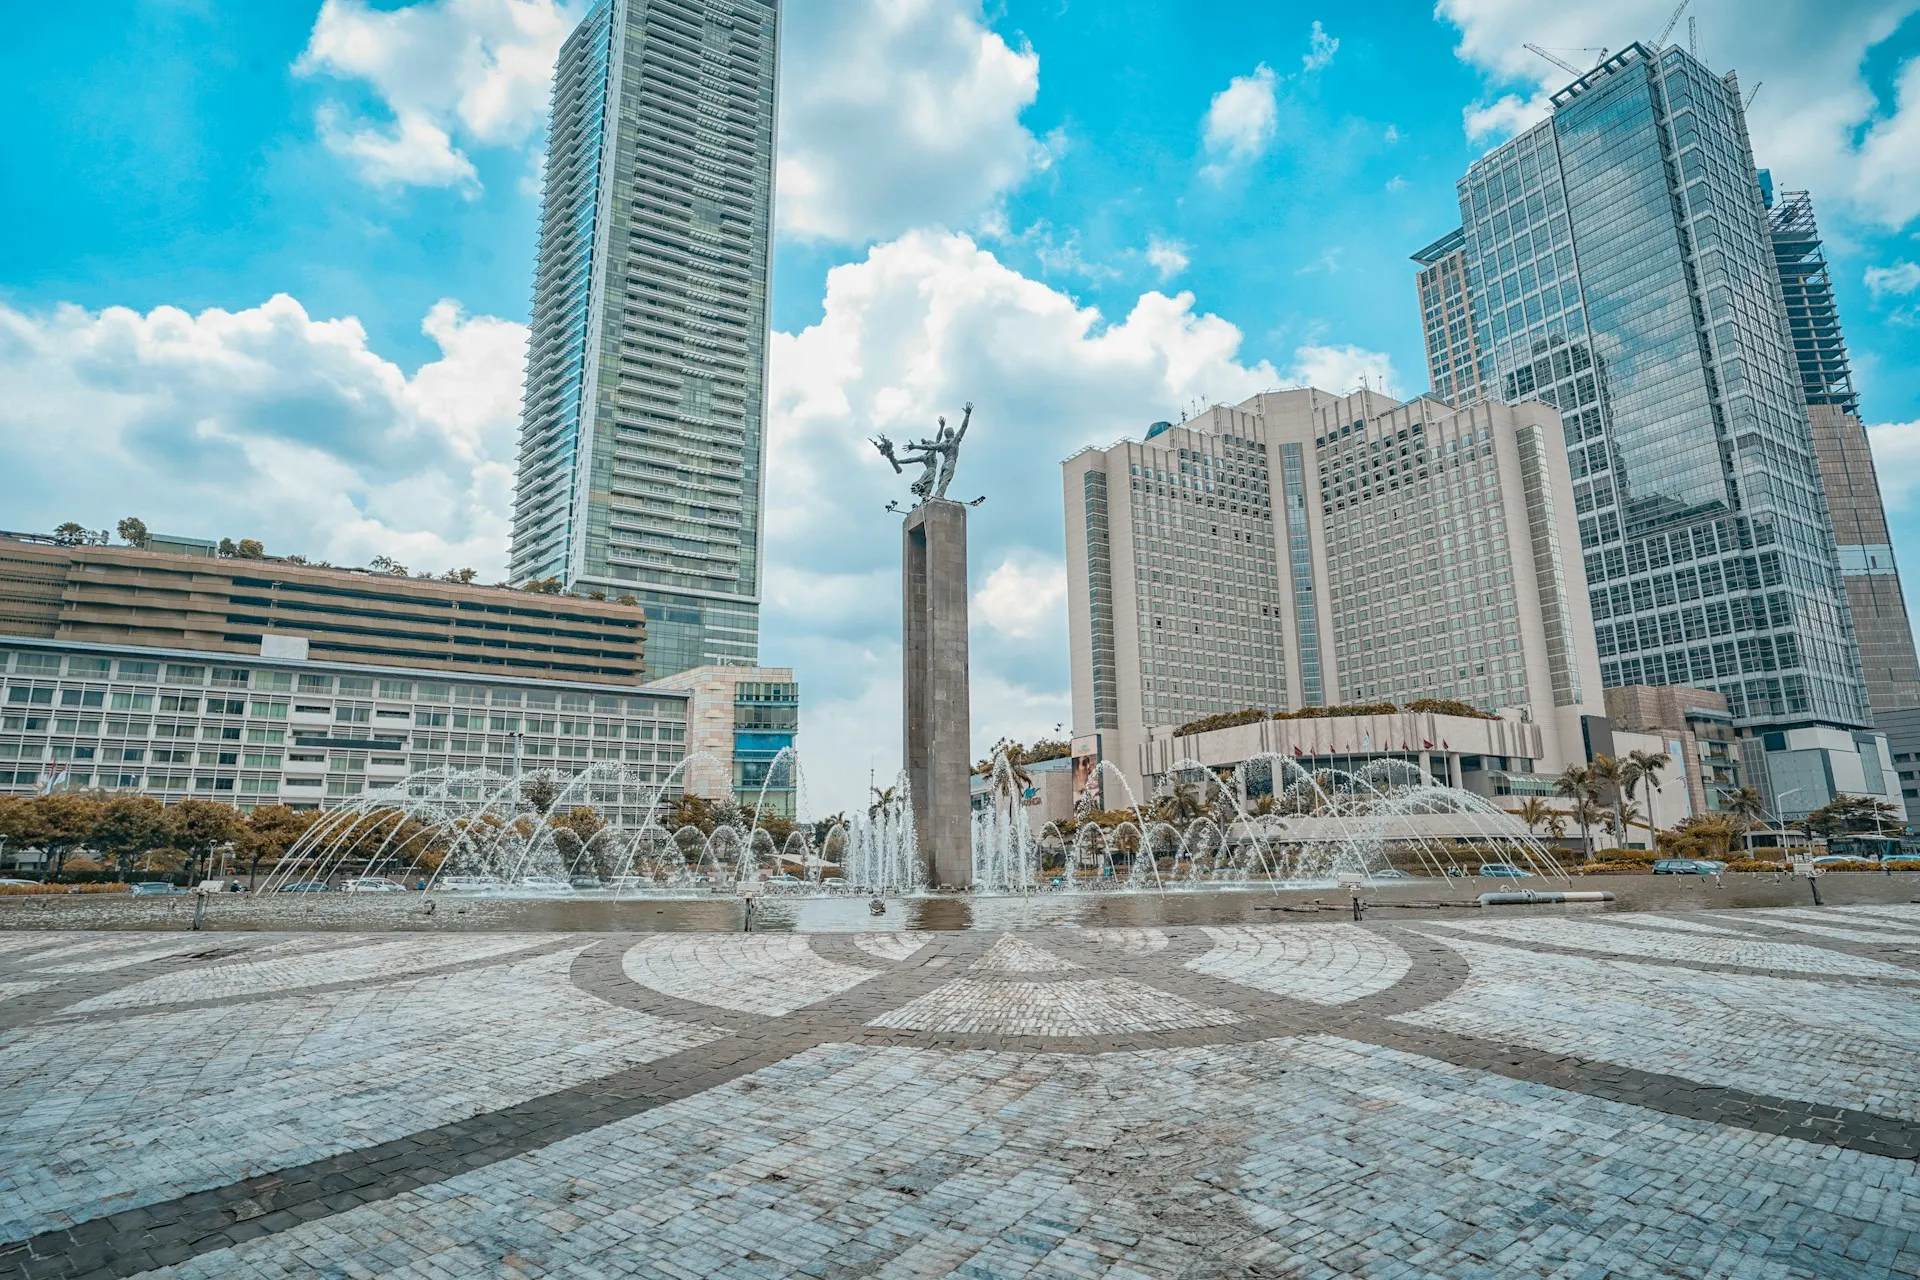 Cityscape of Jakarta. Source: Photo by Muhammad Syafi Al on Unsplash